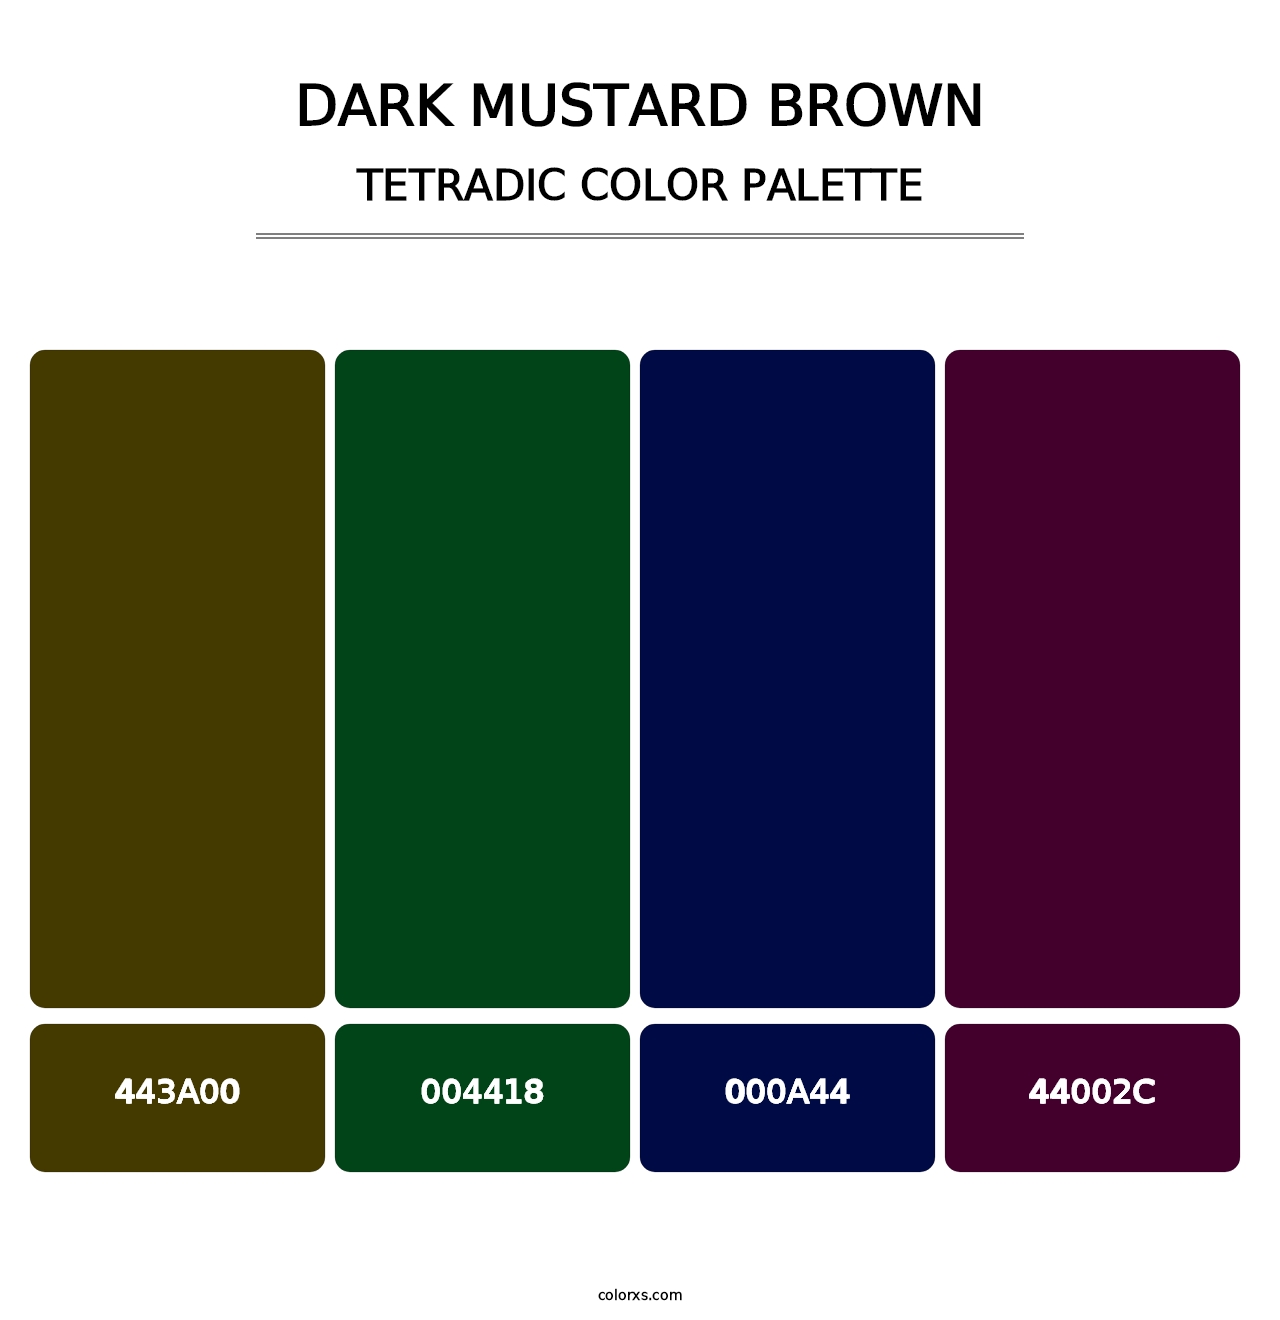 Dark Mustard Brown - Tetradic Color Palette